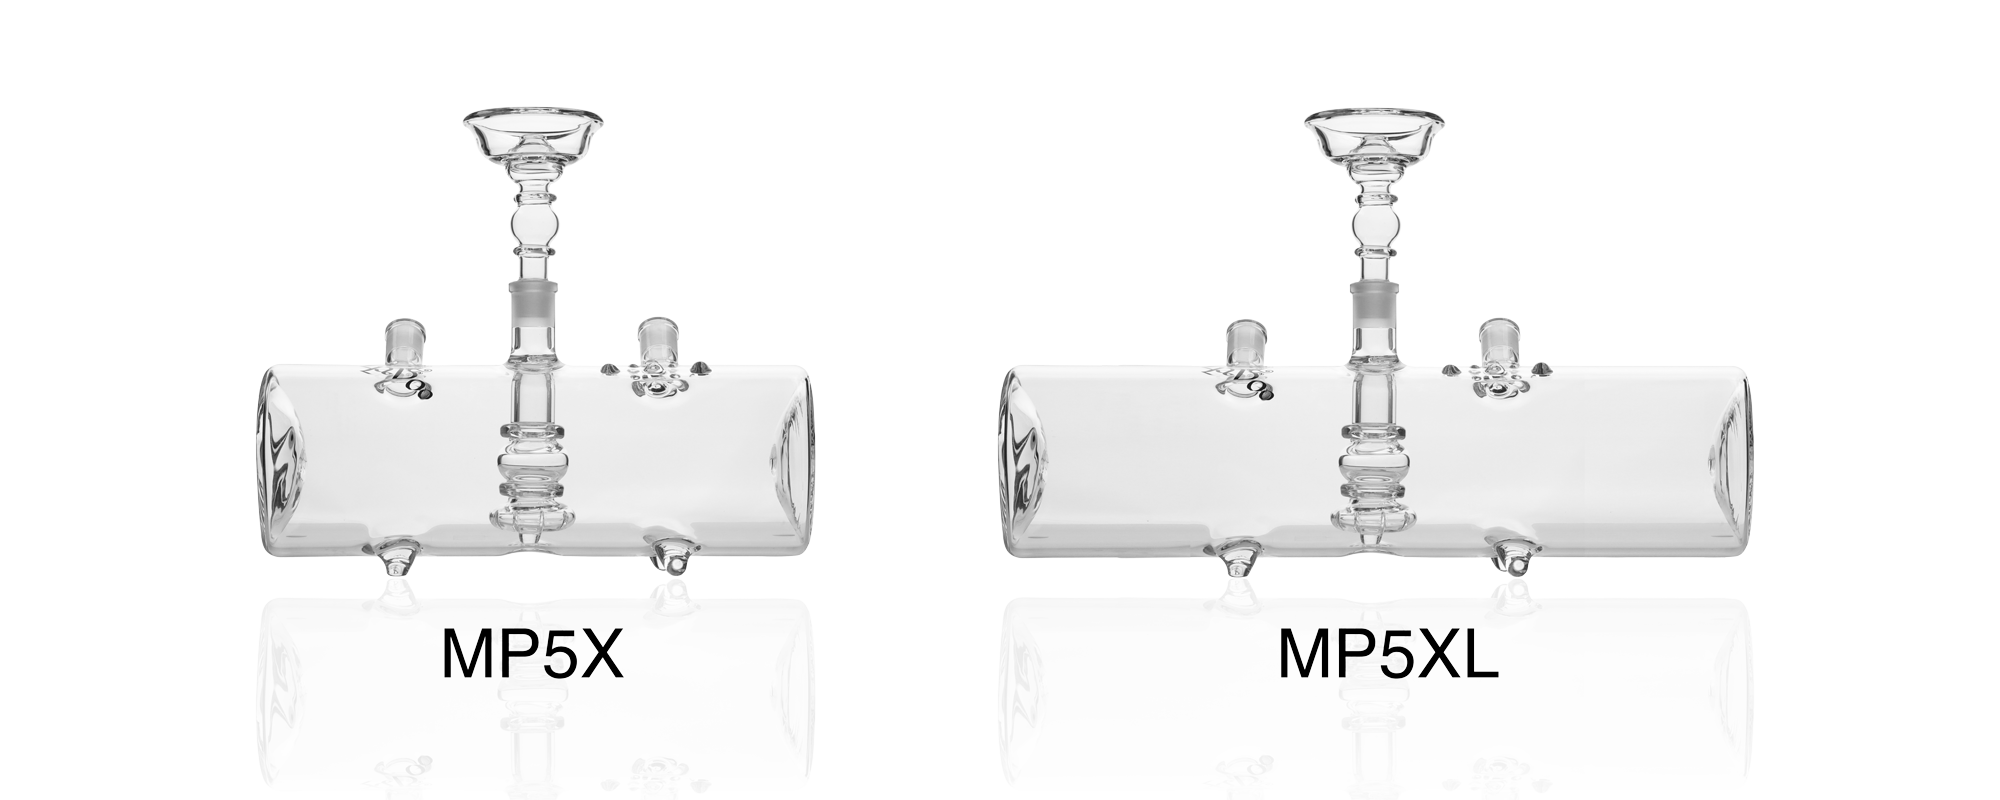 Lavoo Hookah MP5X and MP5XL Comparison